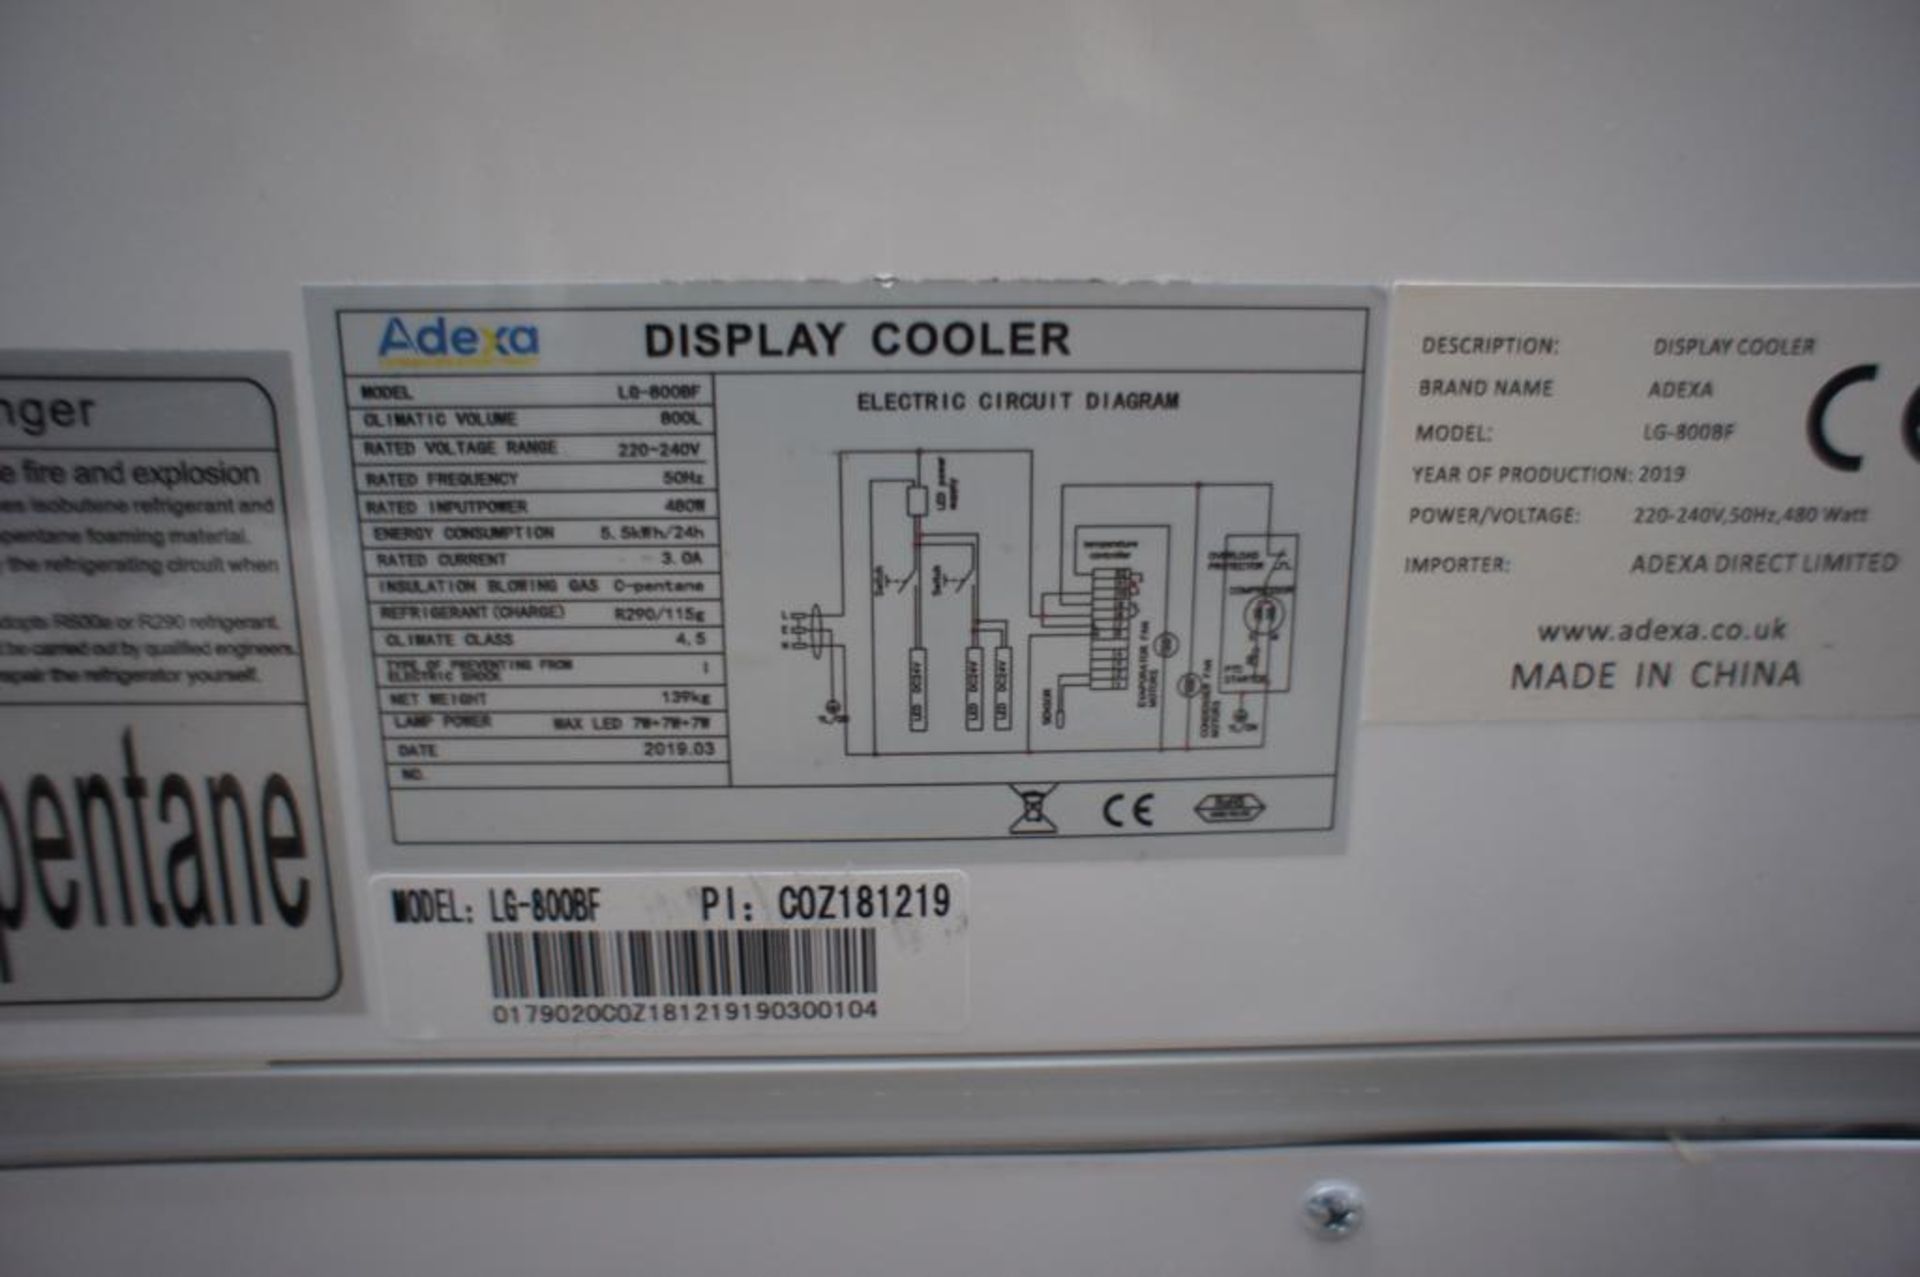 Adexa LG-800BF Double Door Display Refrigerator, 240v - Image 4 of 5